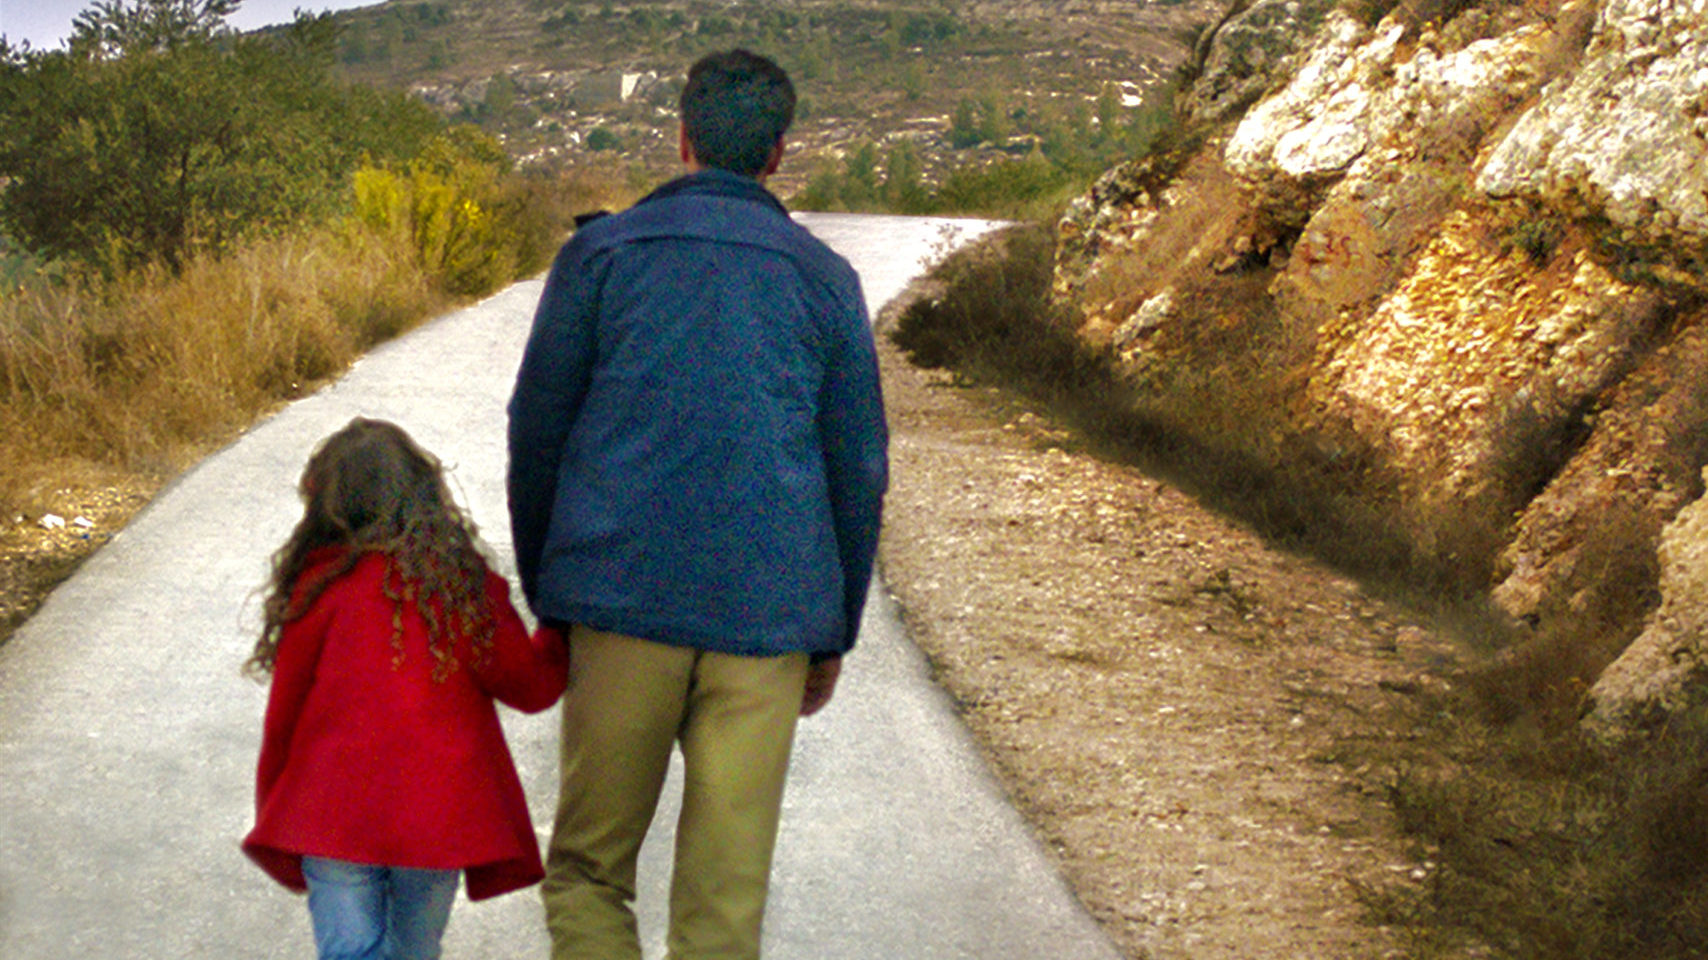 ‘The Present,’ Short Film By British-Palestinian Director, Wins BAFTA